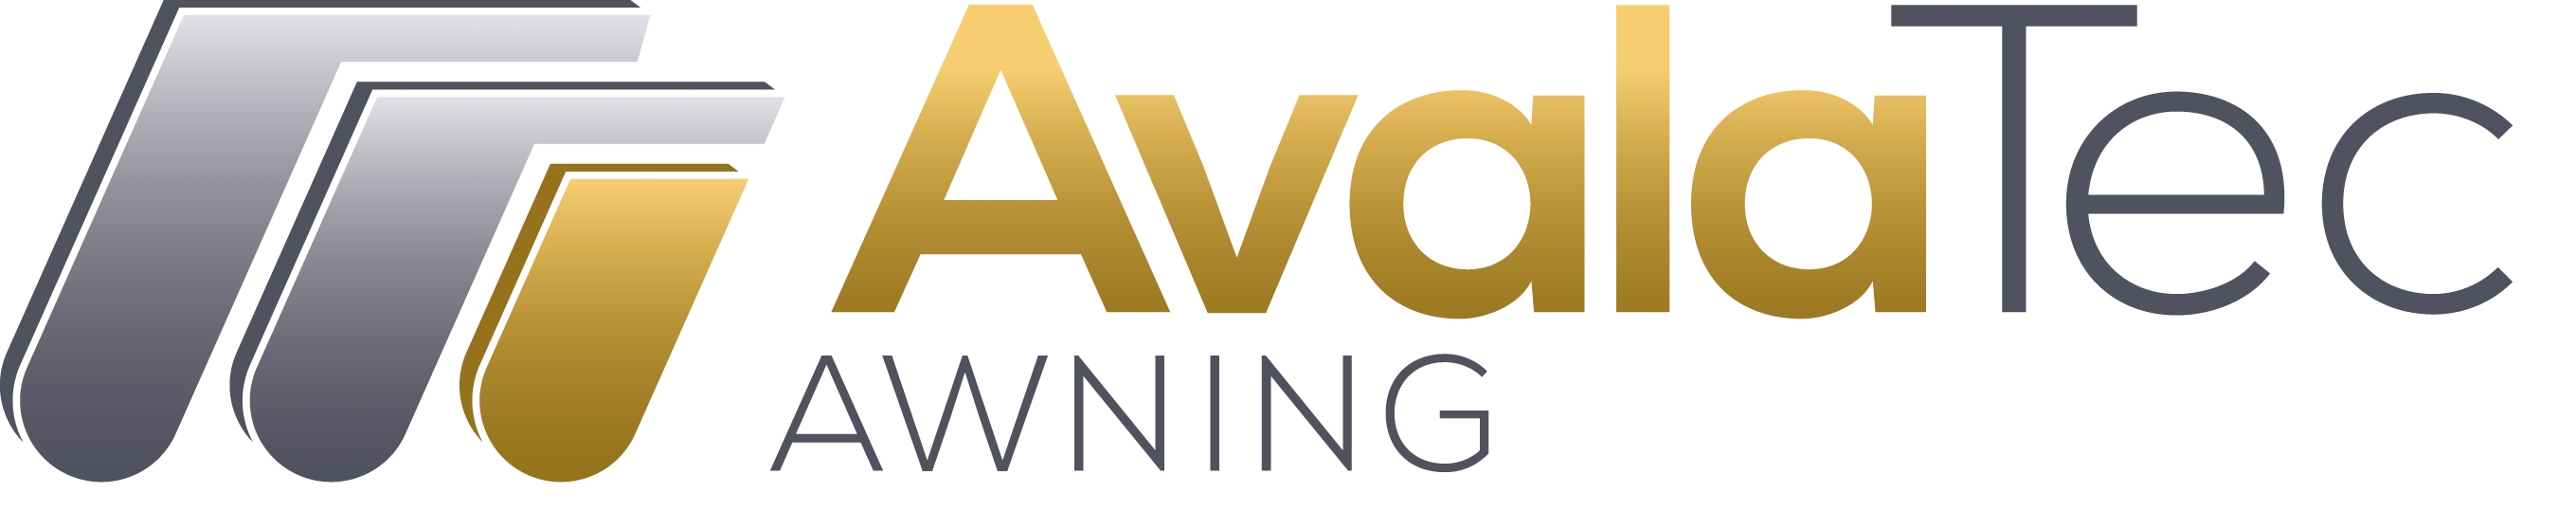 Atlantic Awning Logo